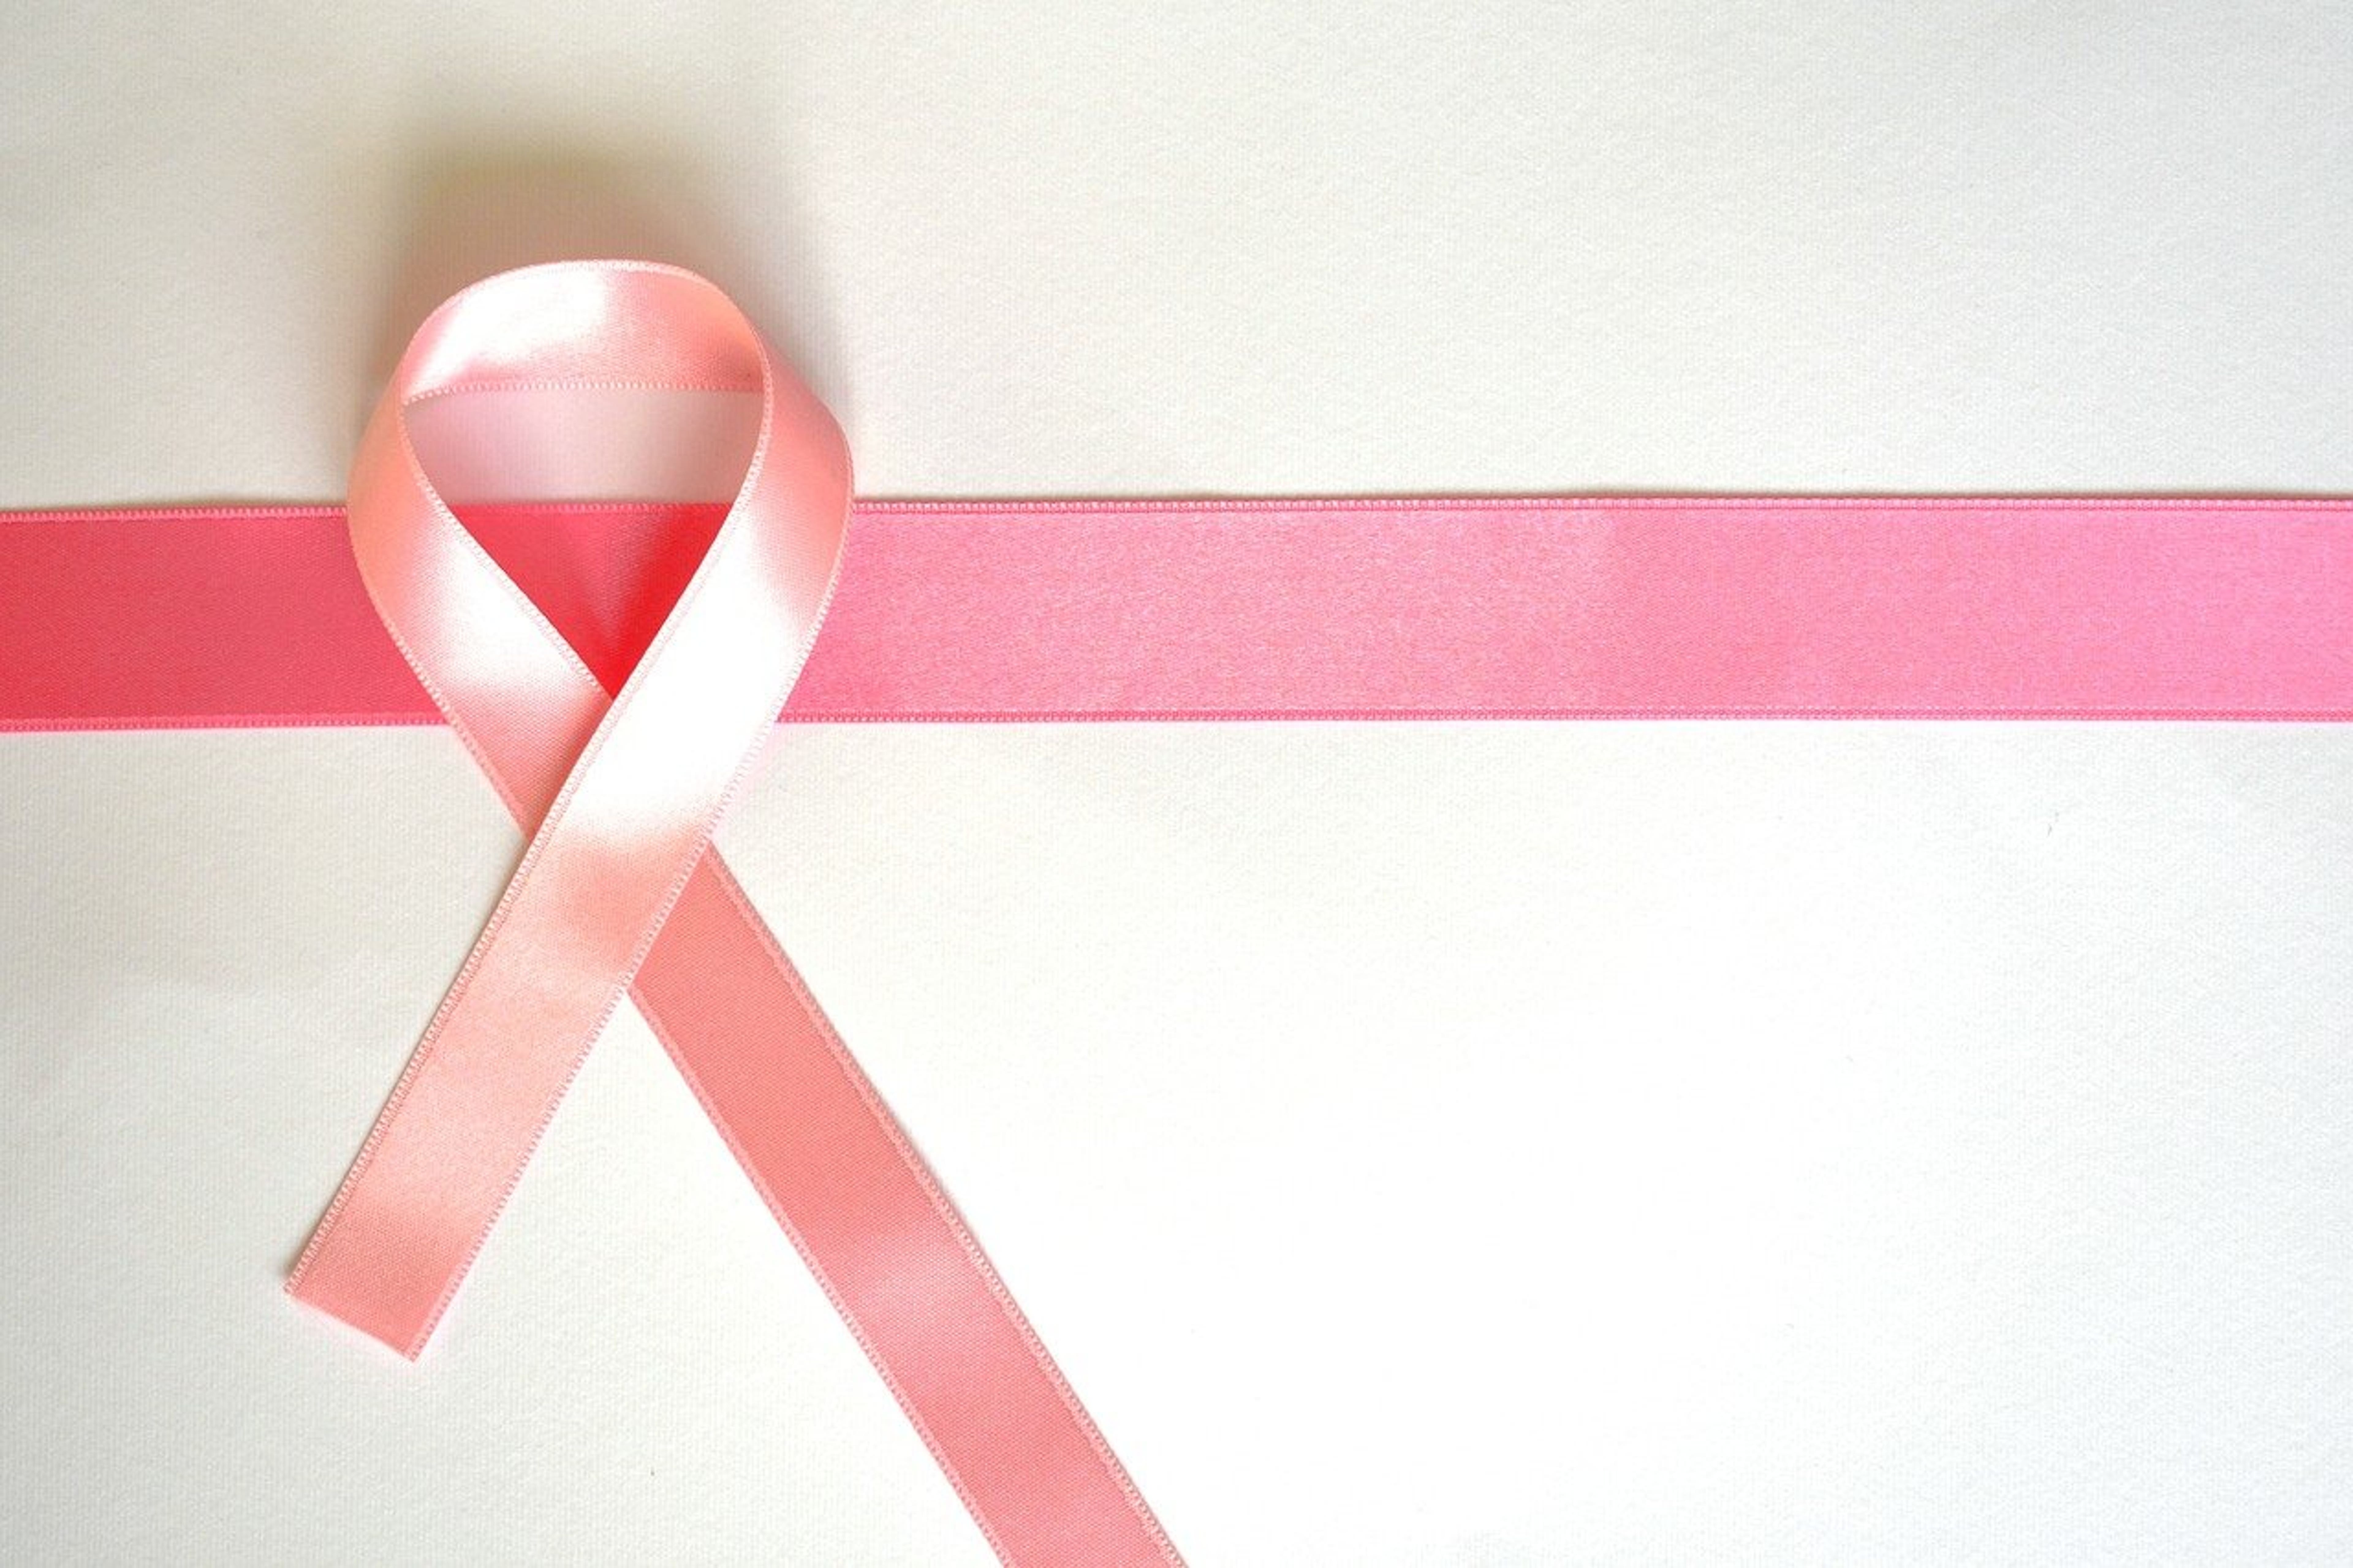 AstraZeneca-Daiichi Breast Cancer Drug Cuts Disease Progression Or Death Risk By Almost 50%